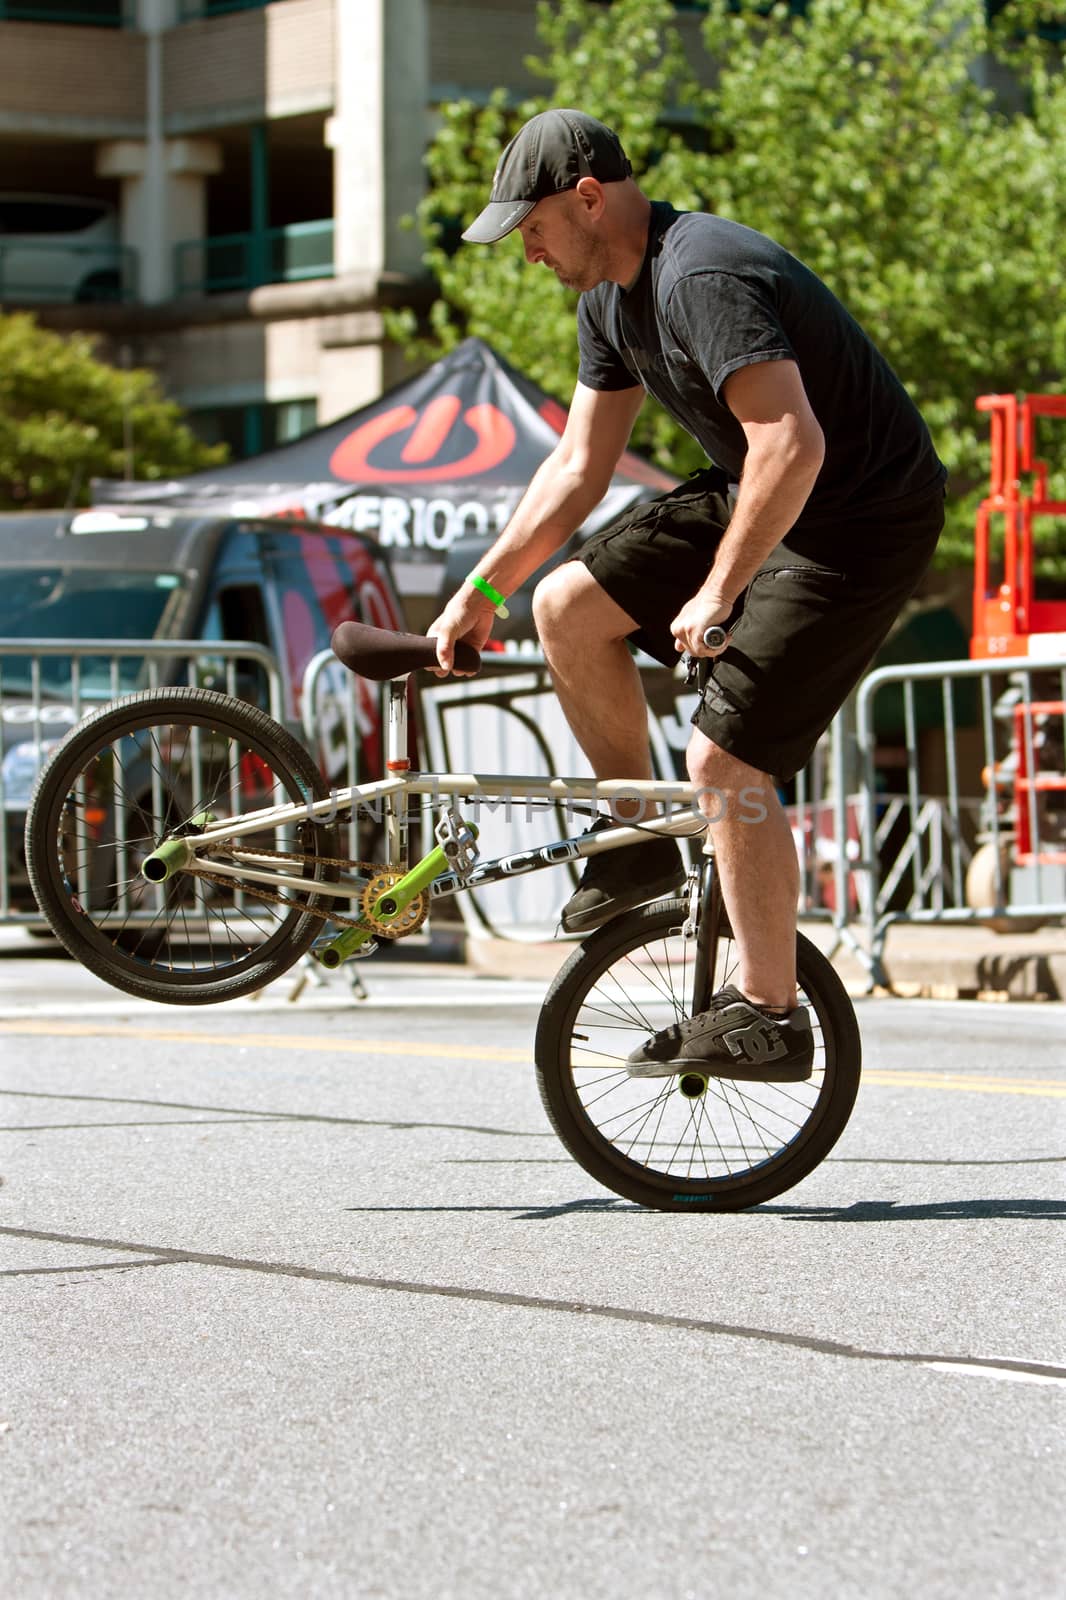 Man Practices Riding Bike Backwards Before BMX Contest by BluIz60